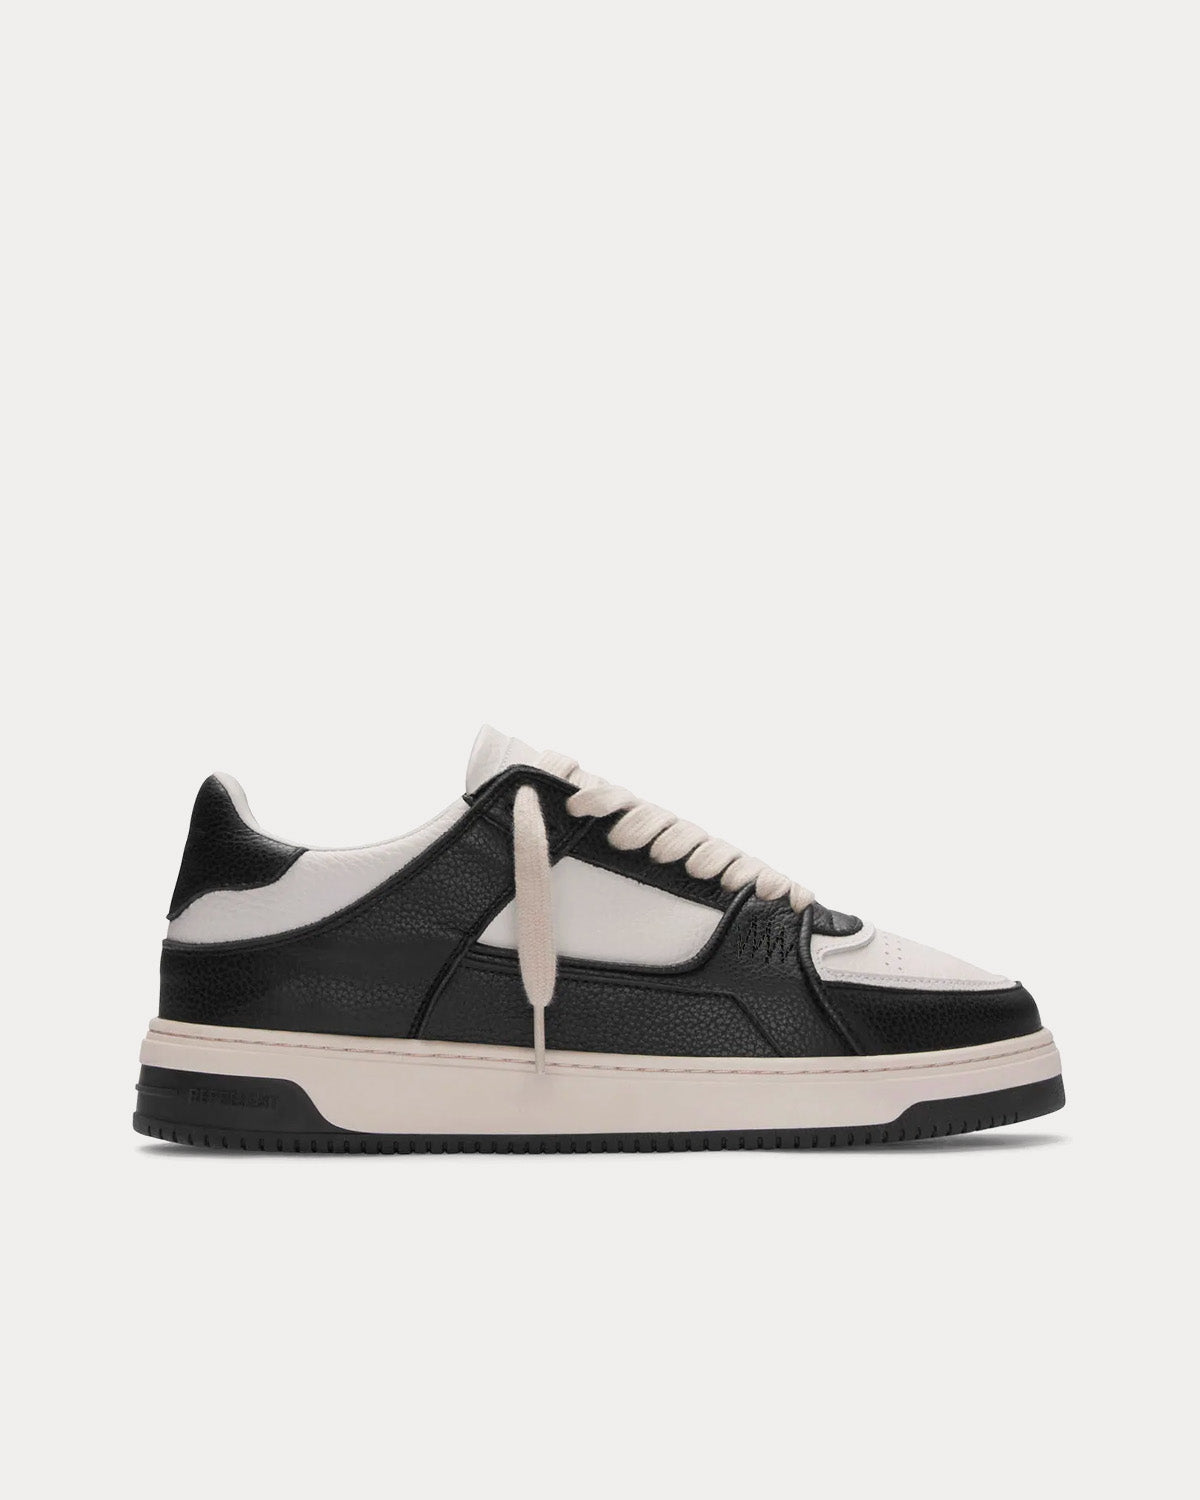 Represent - Apex Black / Vintage White Low Top Sneakers